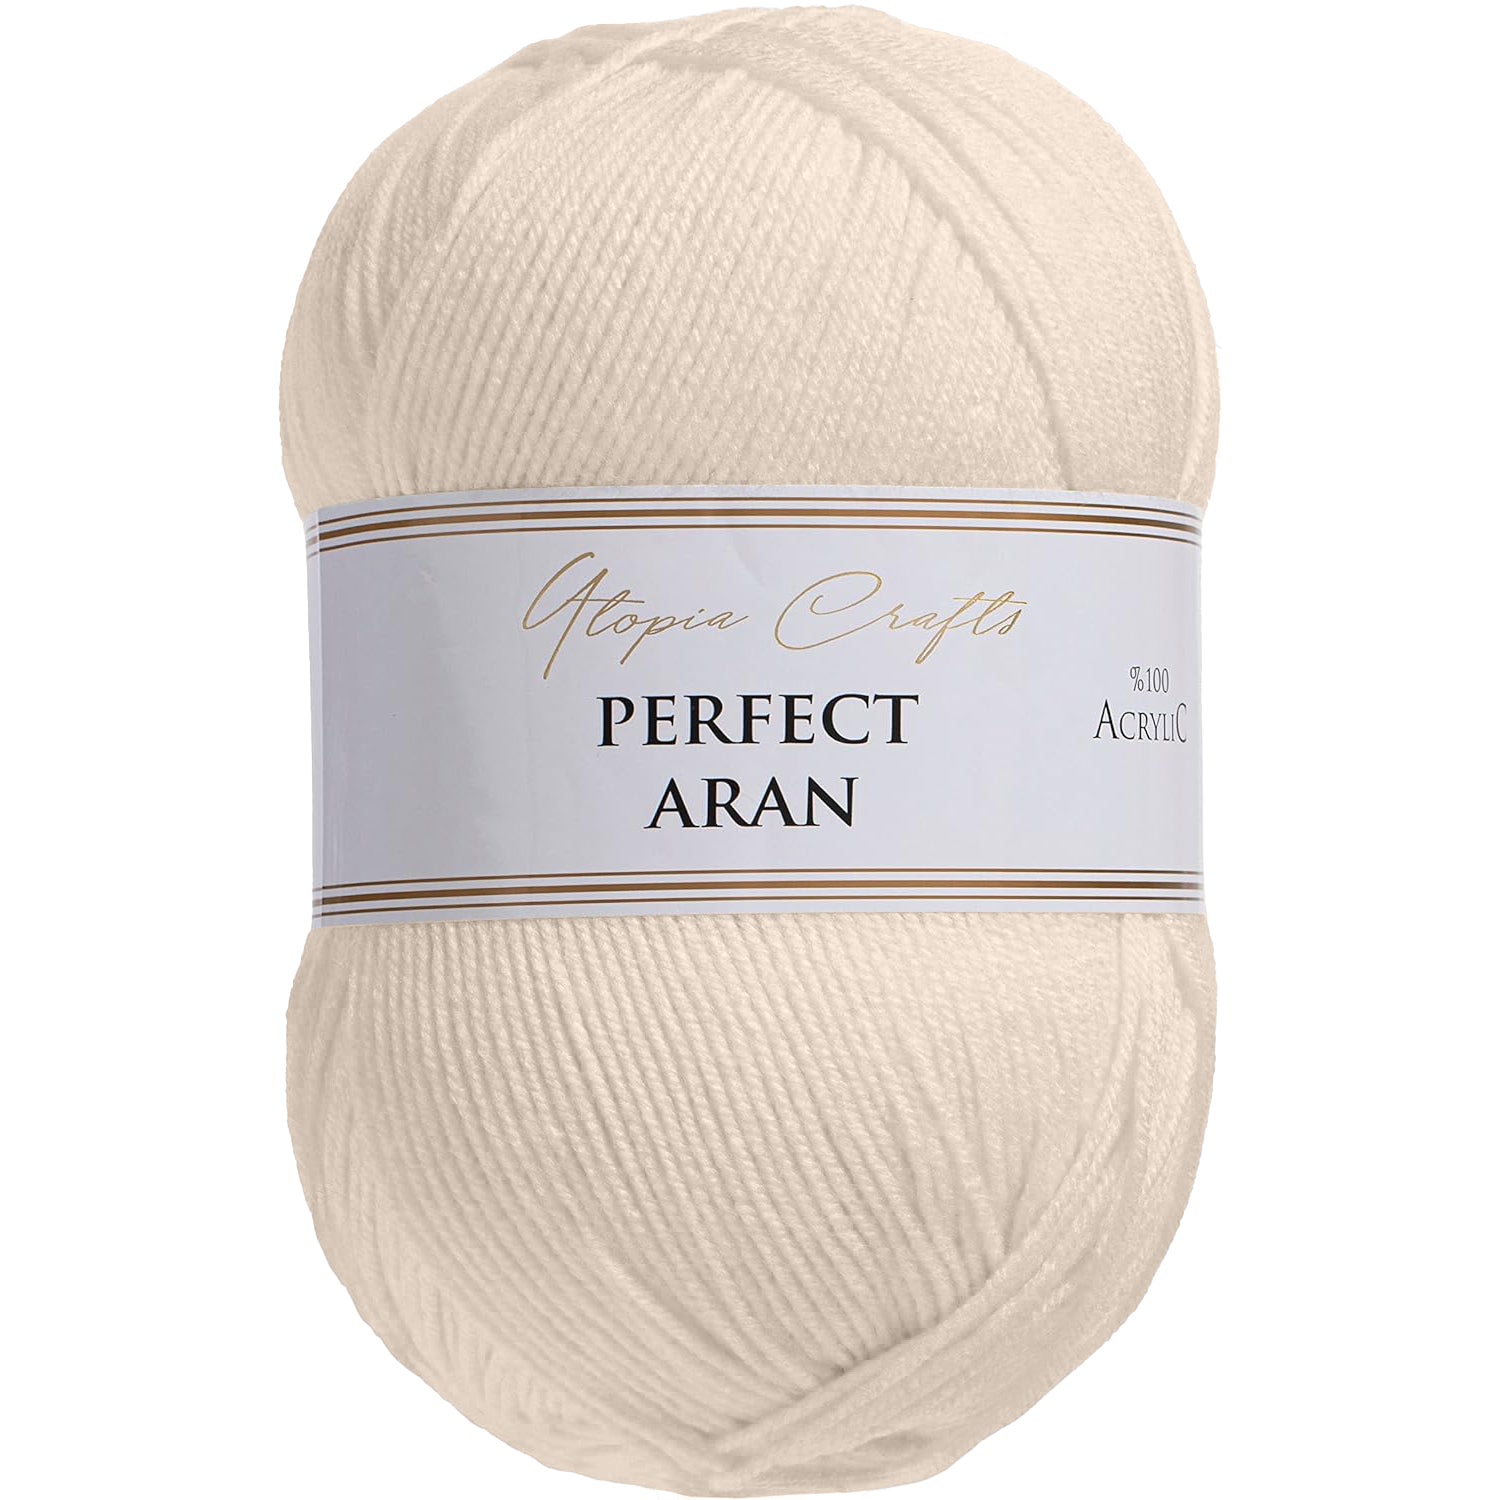 Utopia Crafts Aran Knitting and Crochet Yarn, 400g [Nature Silk]